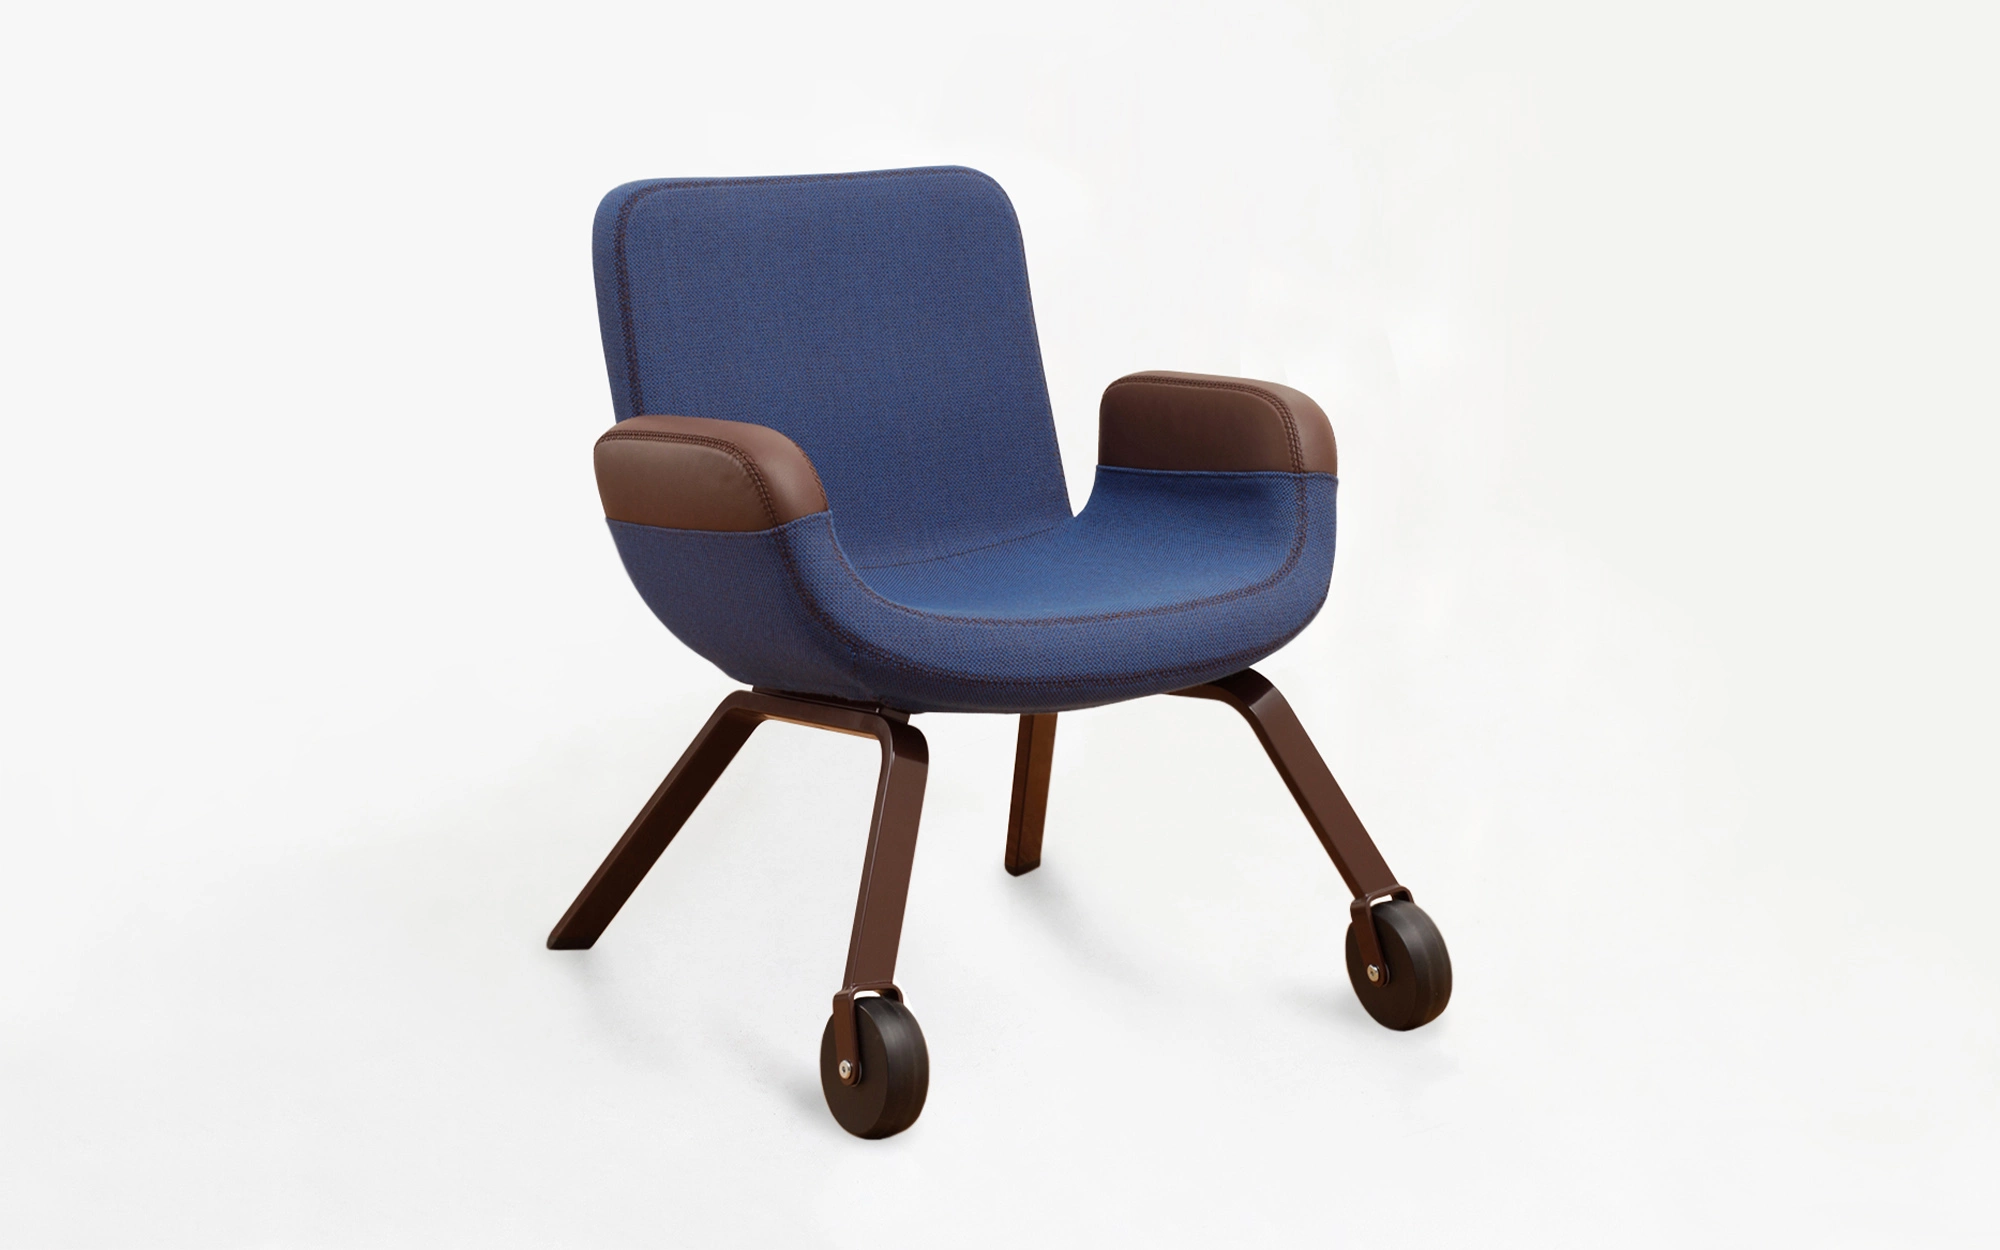 UN Lounge Chair - Hella Jongerius - PAD London 2019.